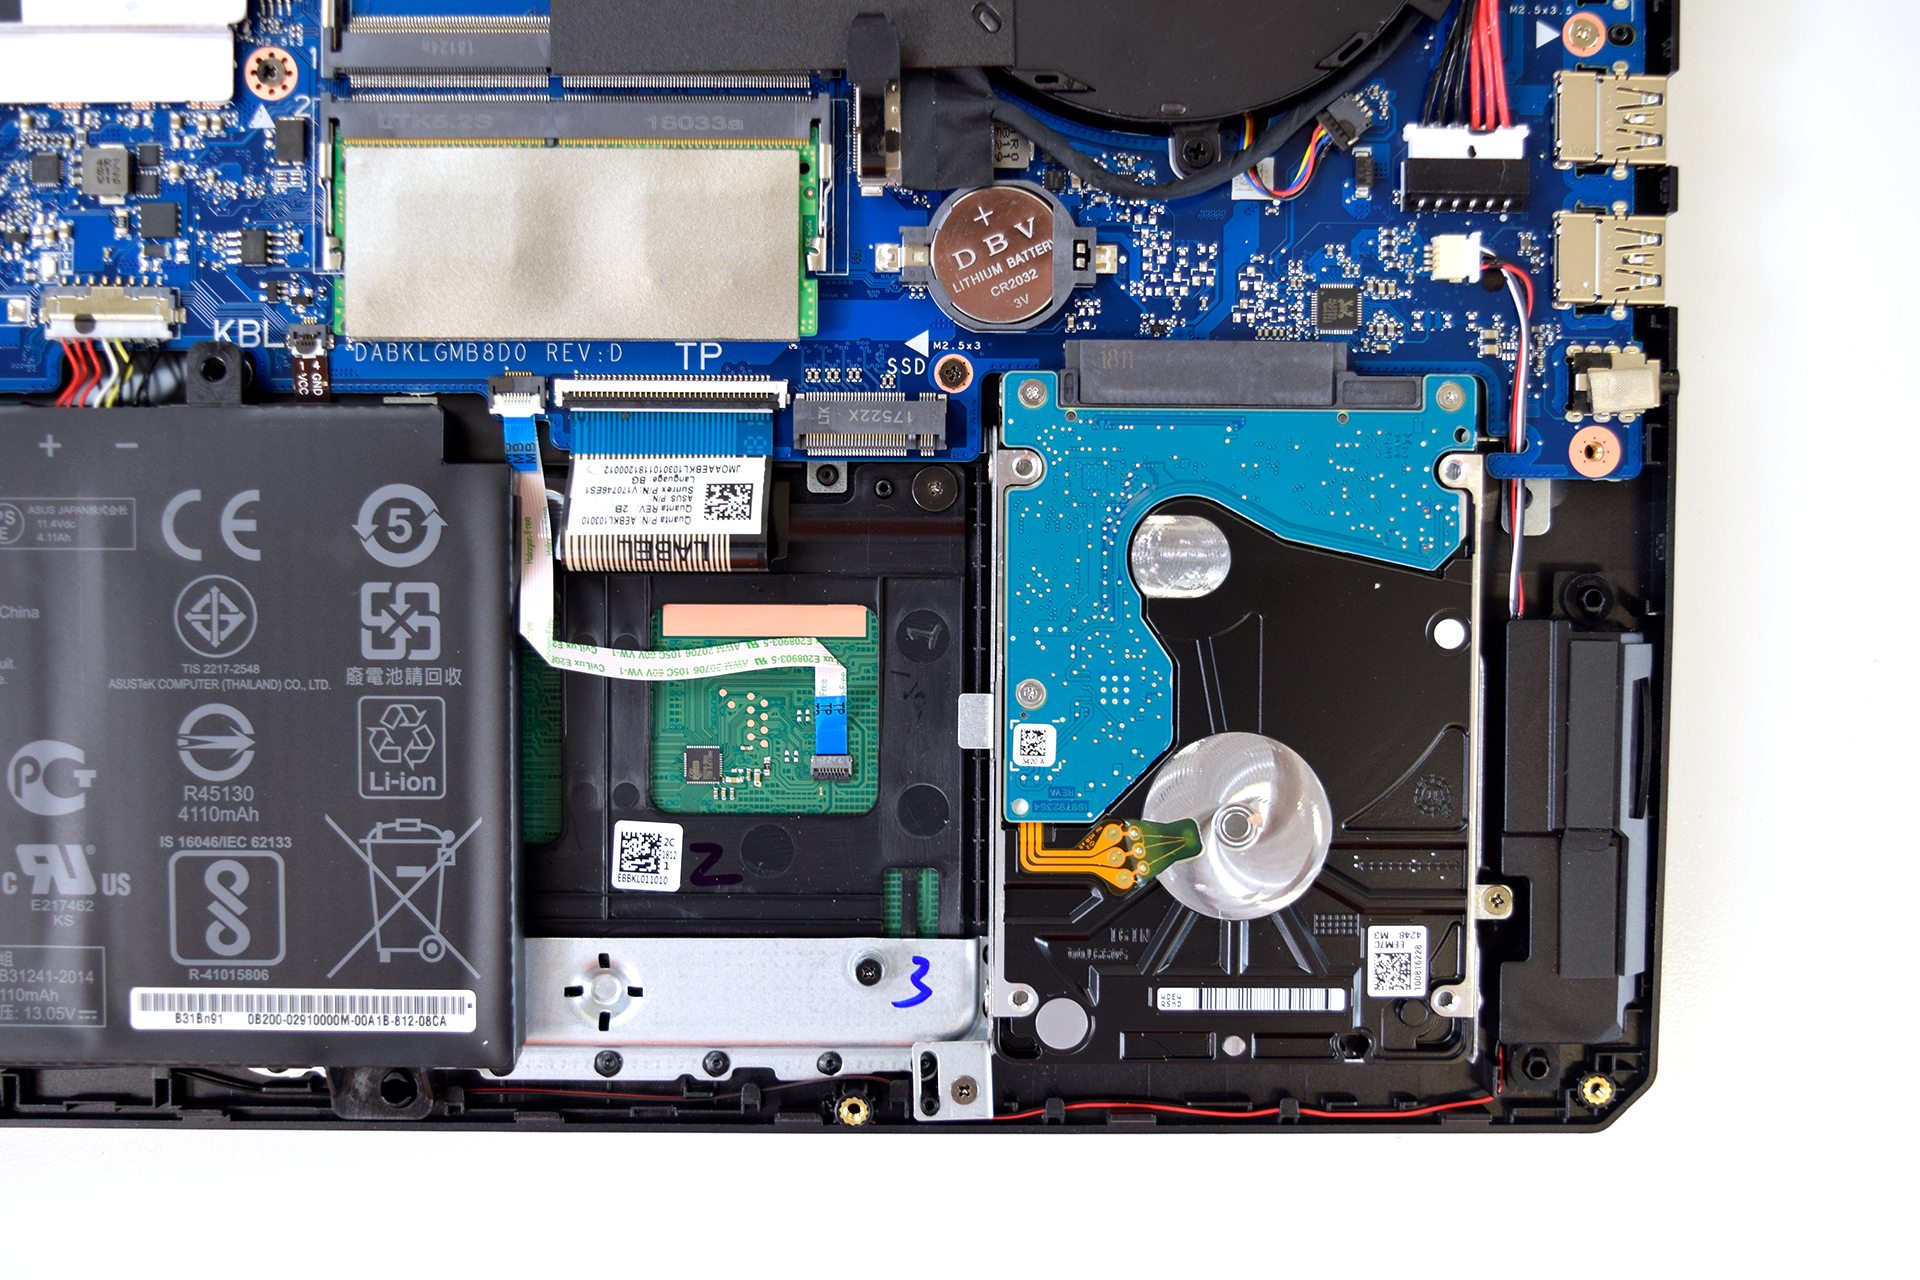 Asus Ordinateur portable de jeu TUF (FX504) 15,6 FHD, Intel Core i7-8750H,  120 Hz, NVIDIA GTX1060, 16 Go DDR4, SSD PCIe 256 Go + disque dur de 1 To